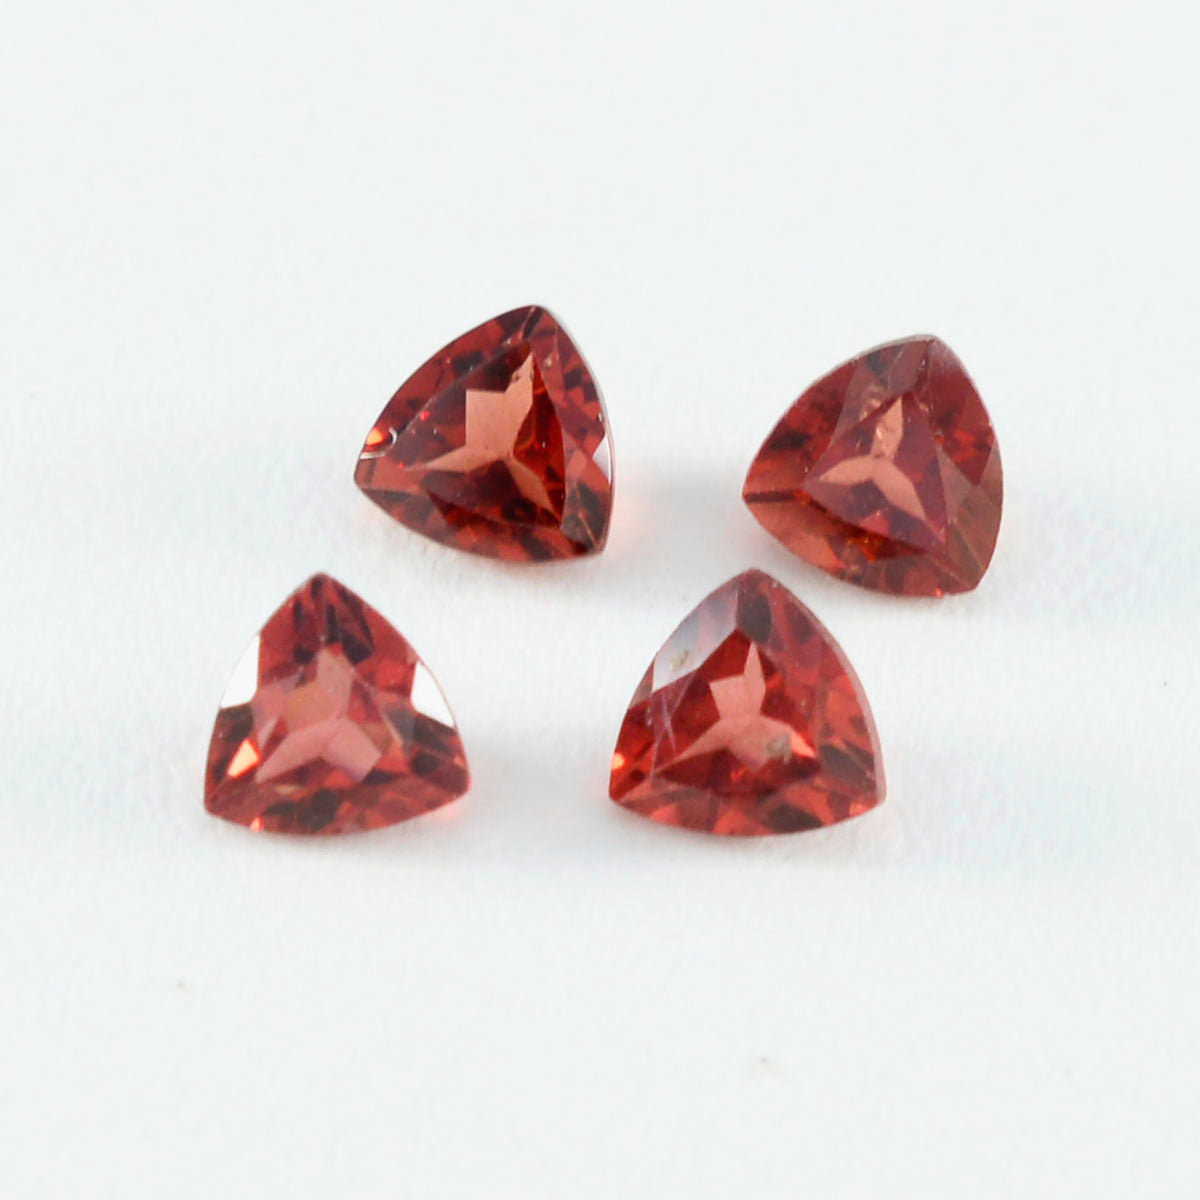 Riyogems 1PC Genuine Red Garnet Faceted 7x7 mm Trillion Shape fantastic Quality Loose Gems